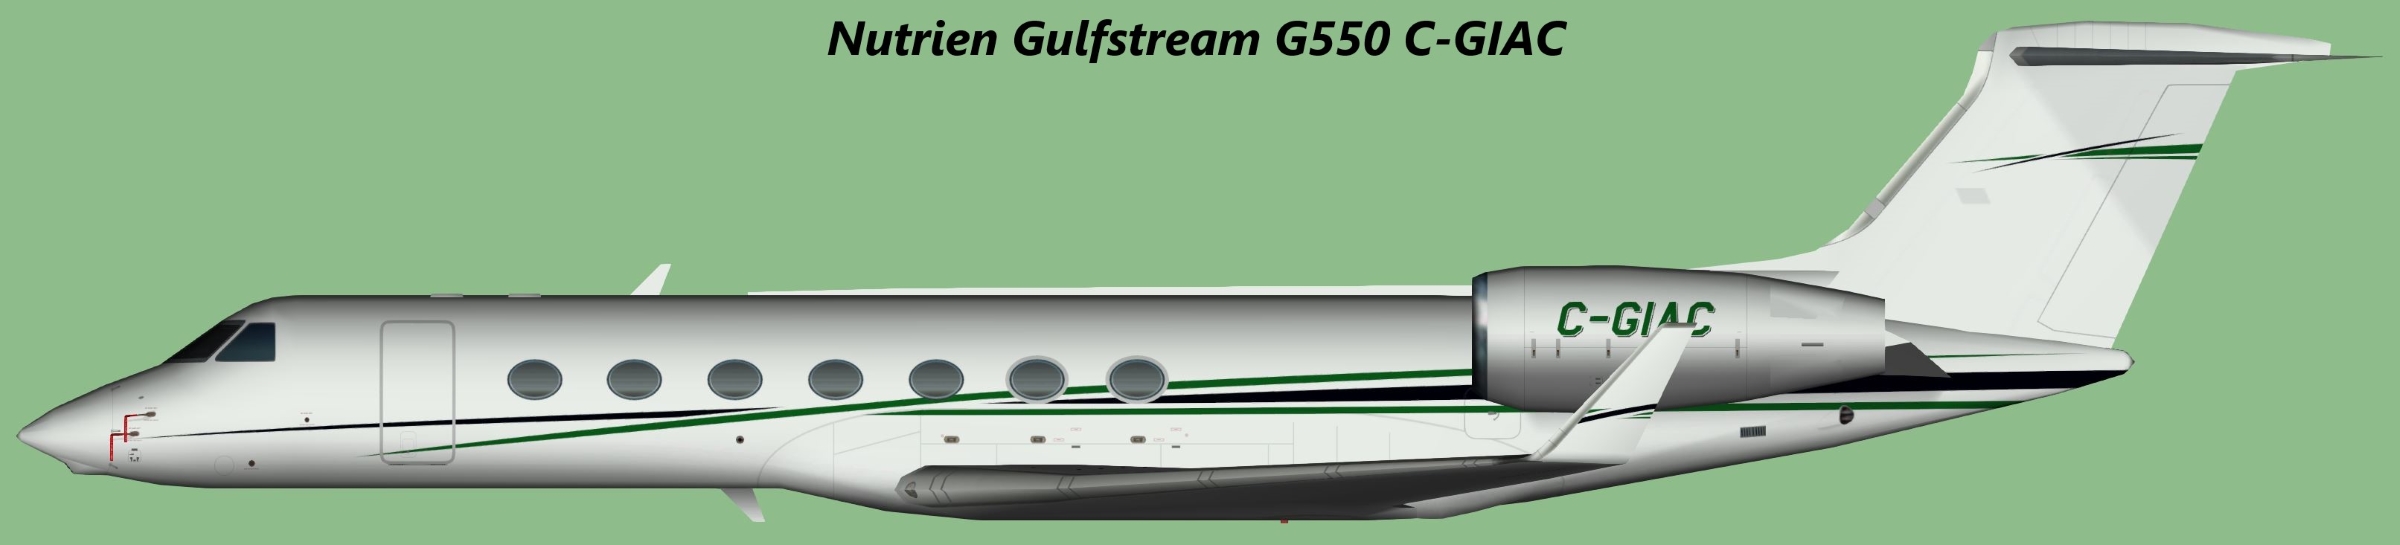 Nutrien Gulfstream G550